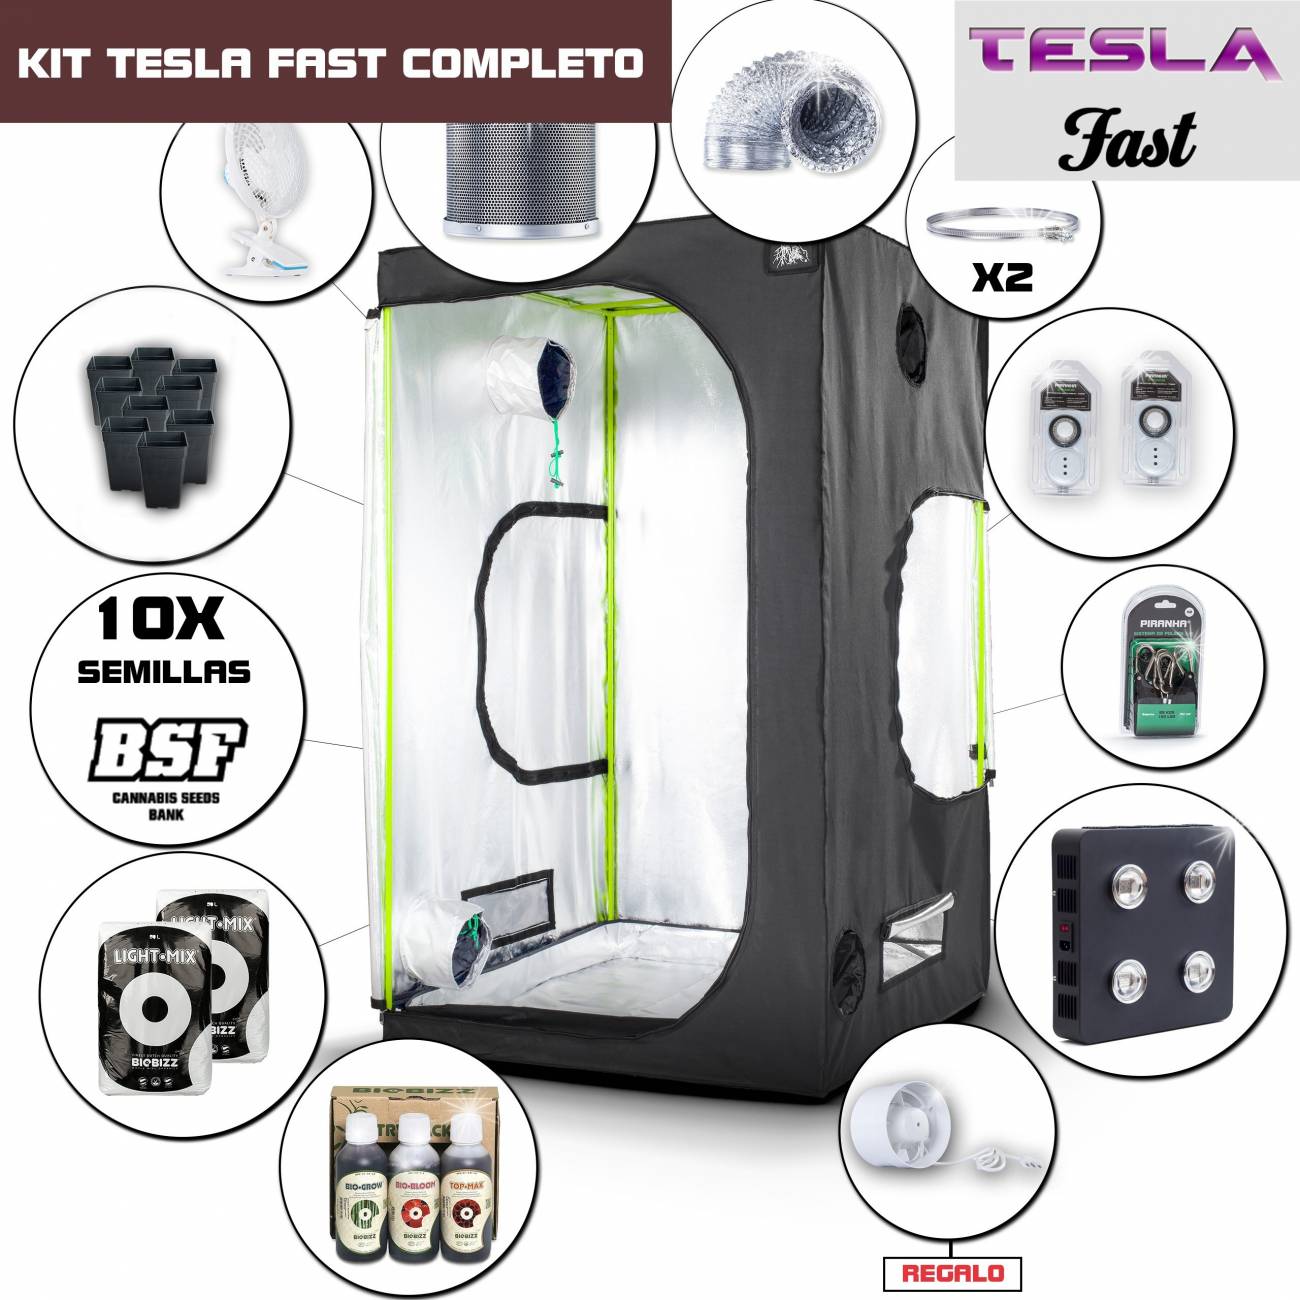 Kit Tesla Fast 120 - T360W Completo